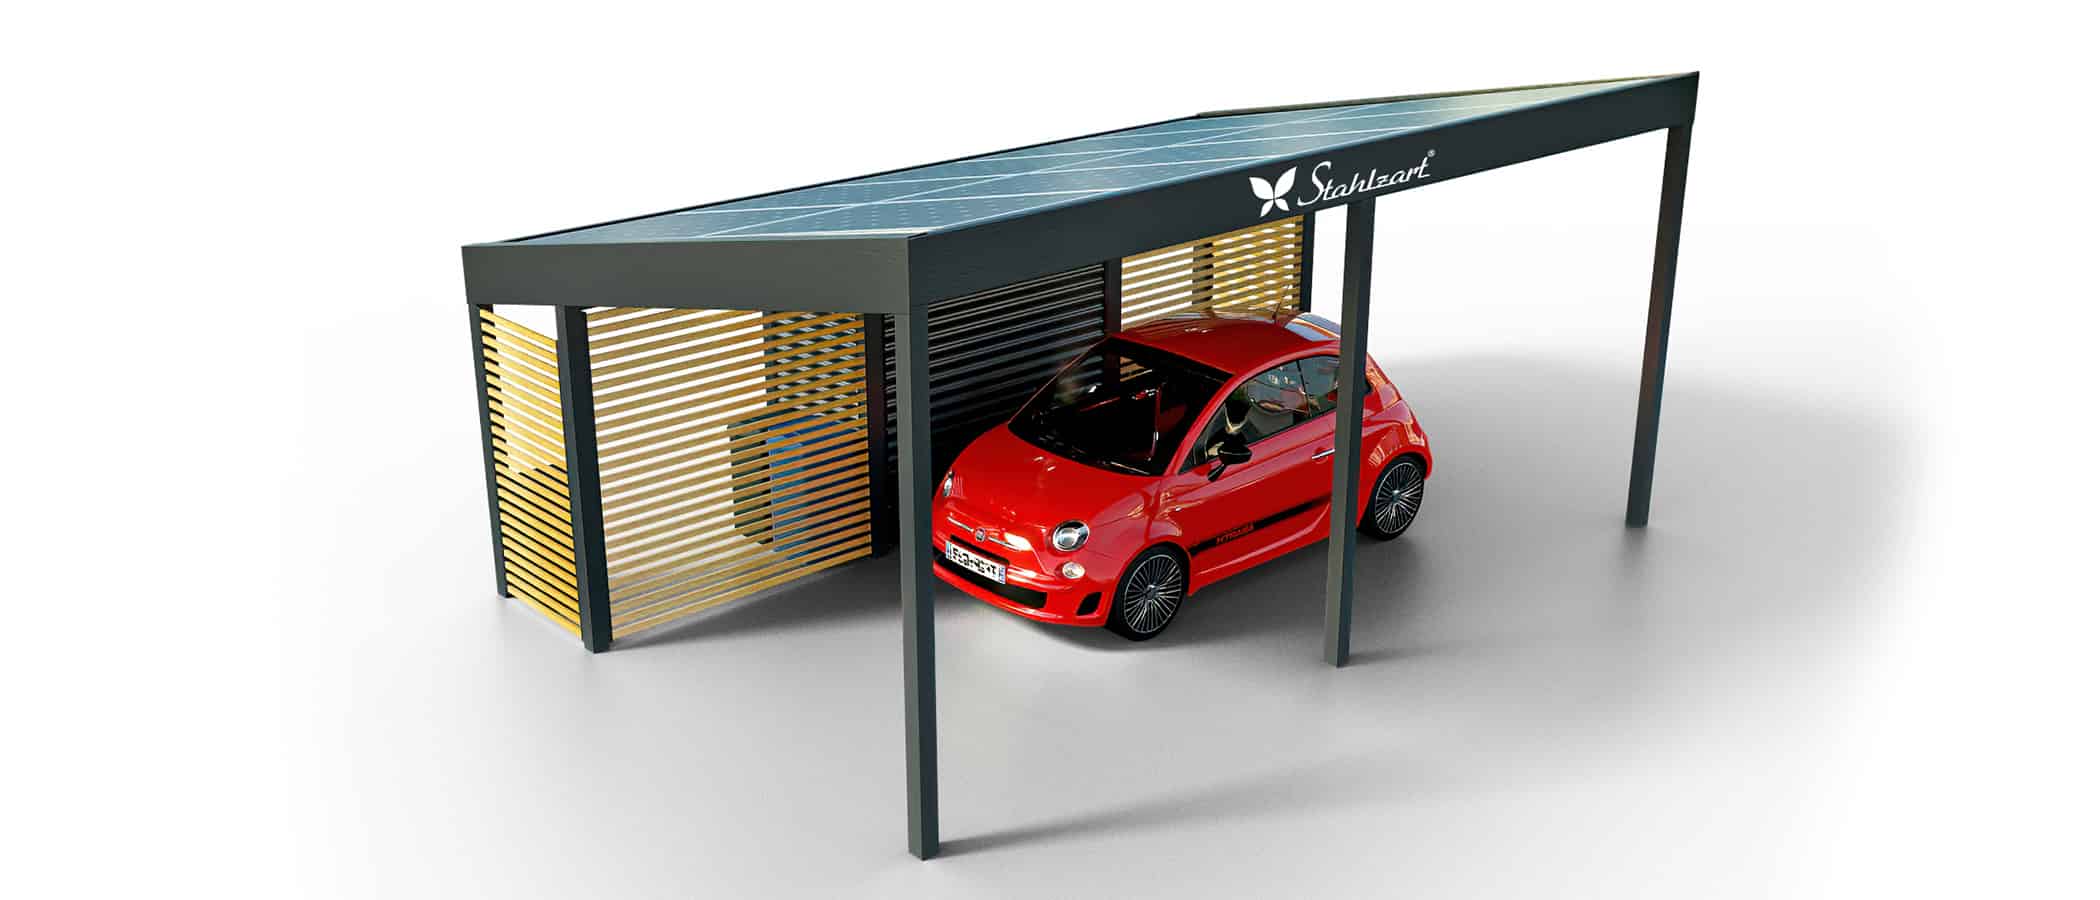 solar-carport-mit-schraegdach-solar-carports-e-fahrzeuge-pv-anlage-solarcarport-strom-solaranalge-carportdach-e-auto-fiat-500e-holz-metall-mit-schuppen-fuer-muelltonnen-modern-stahlzart